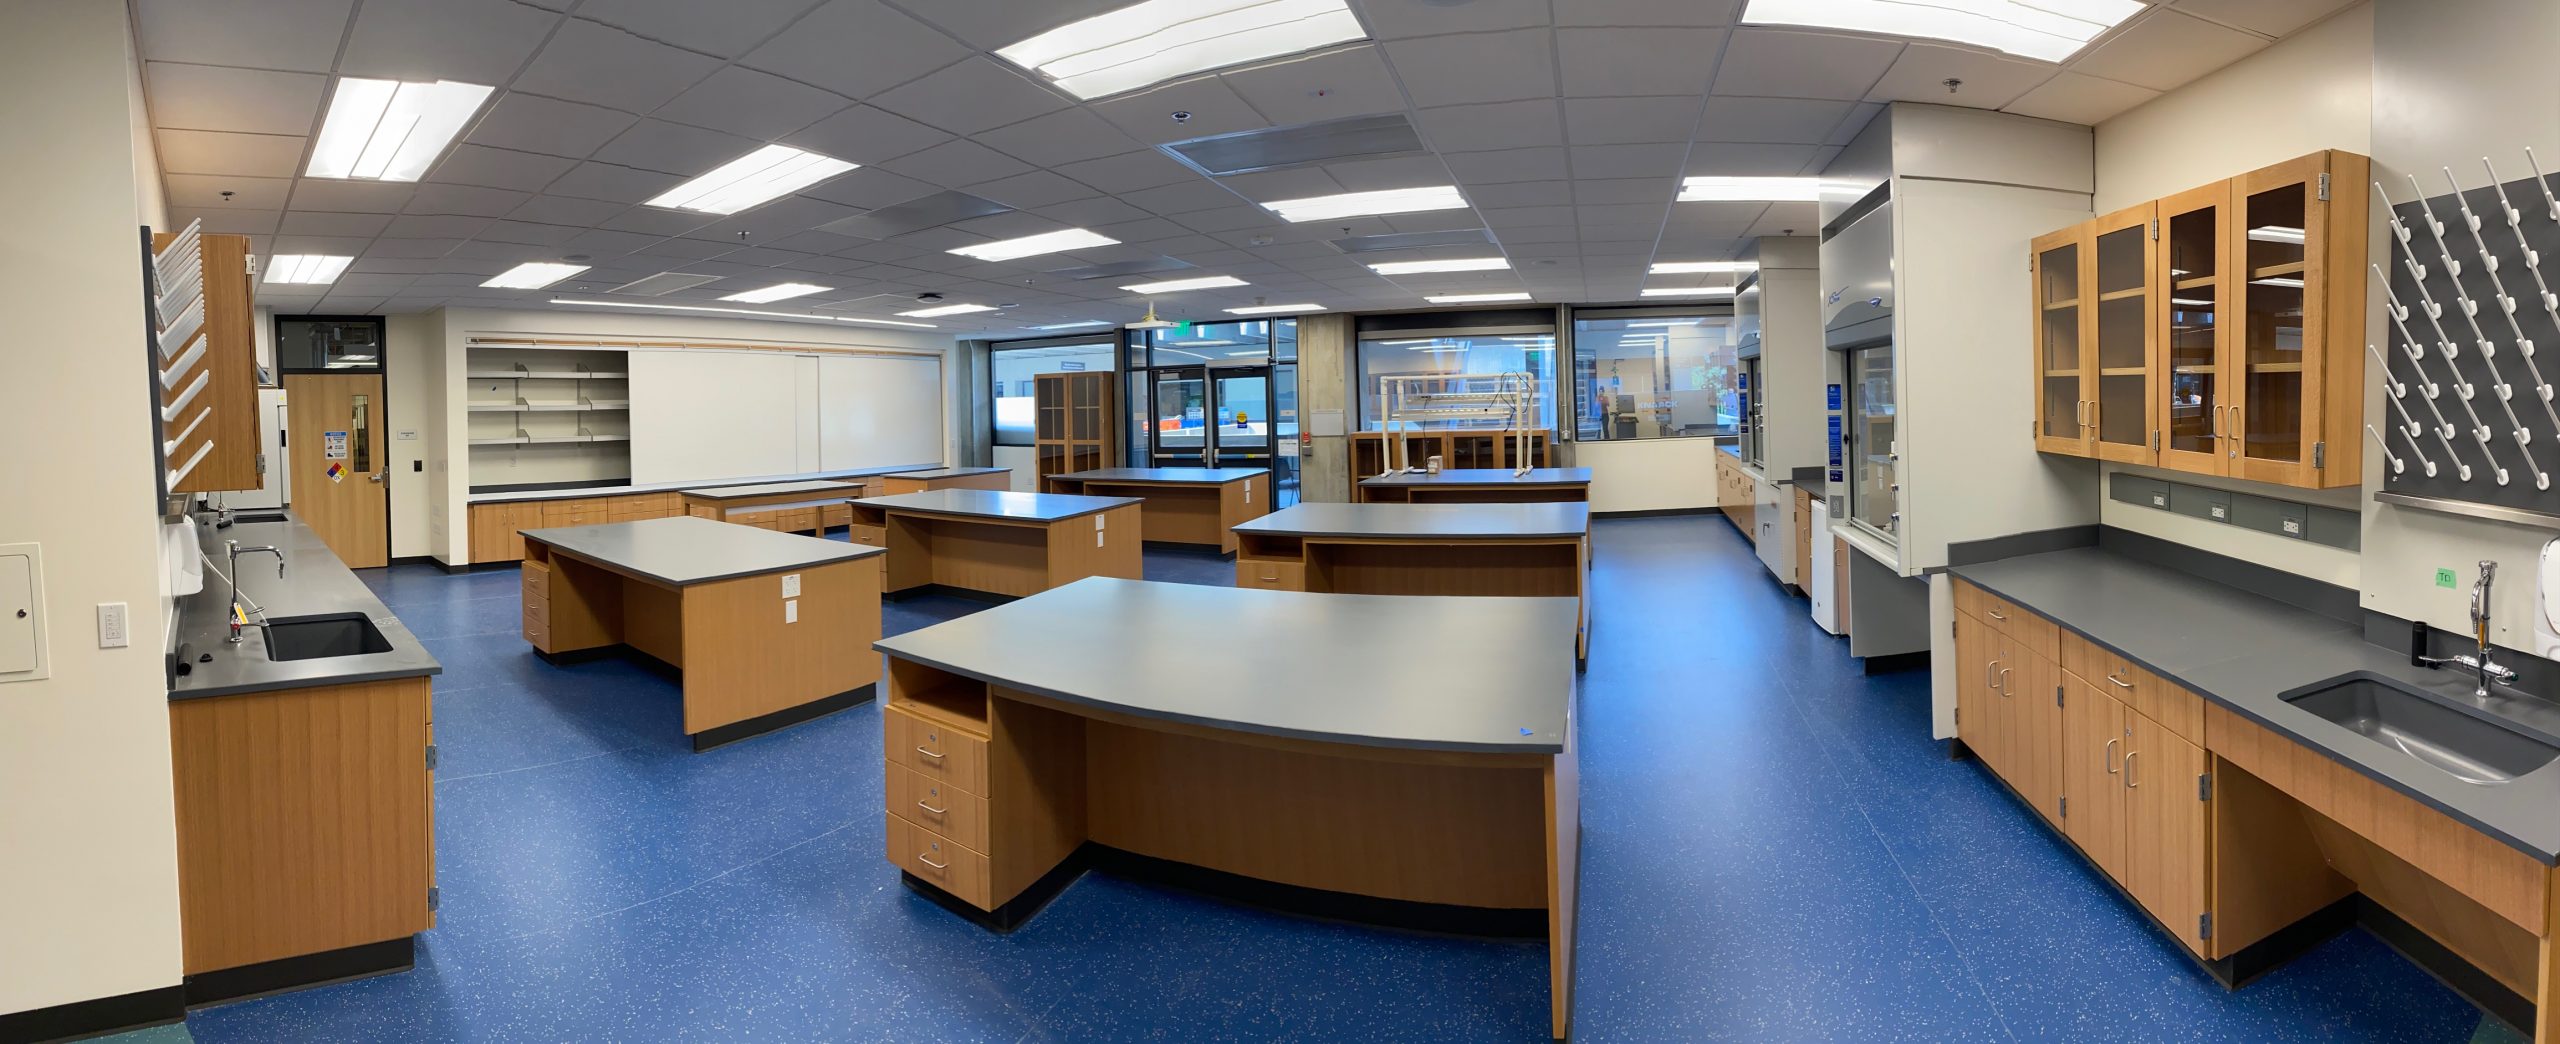 New Biology lab at Sylvania ST building